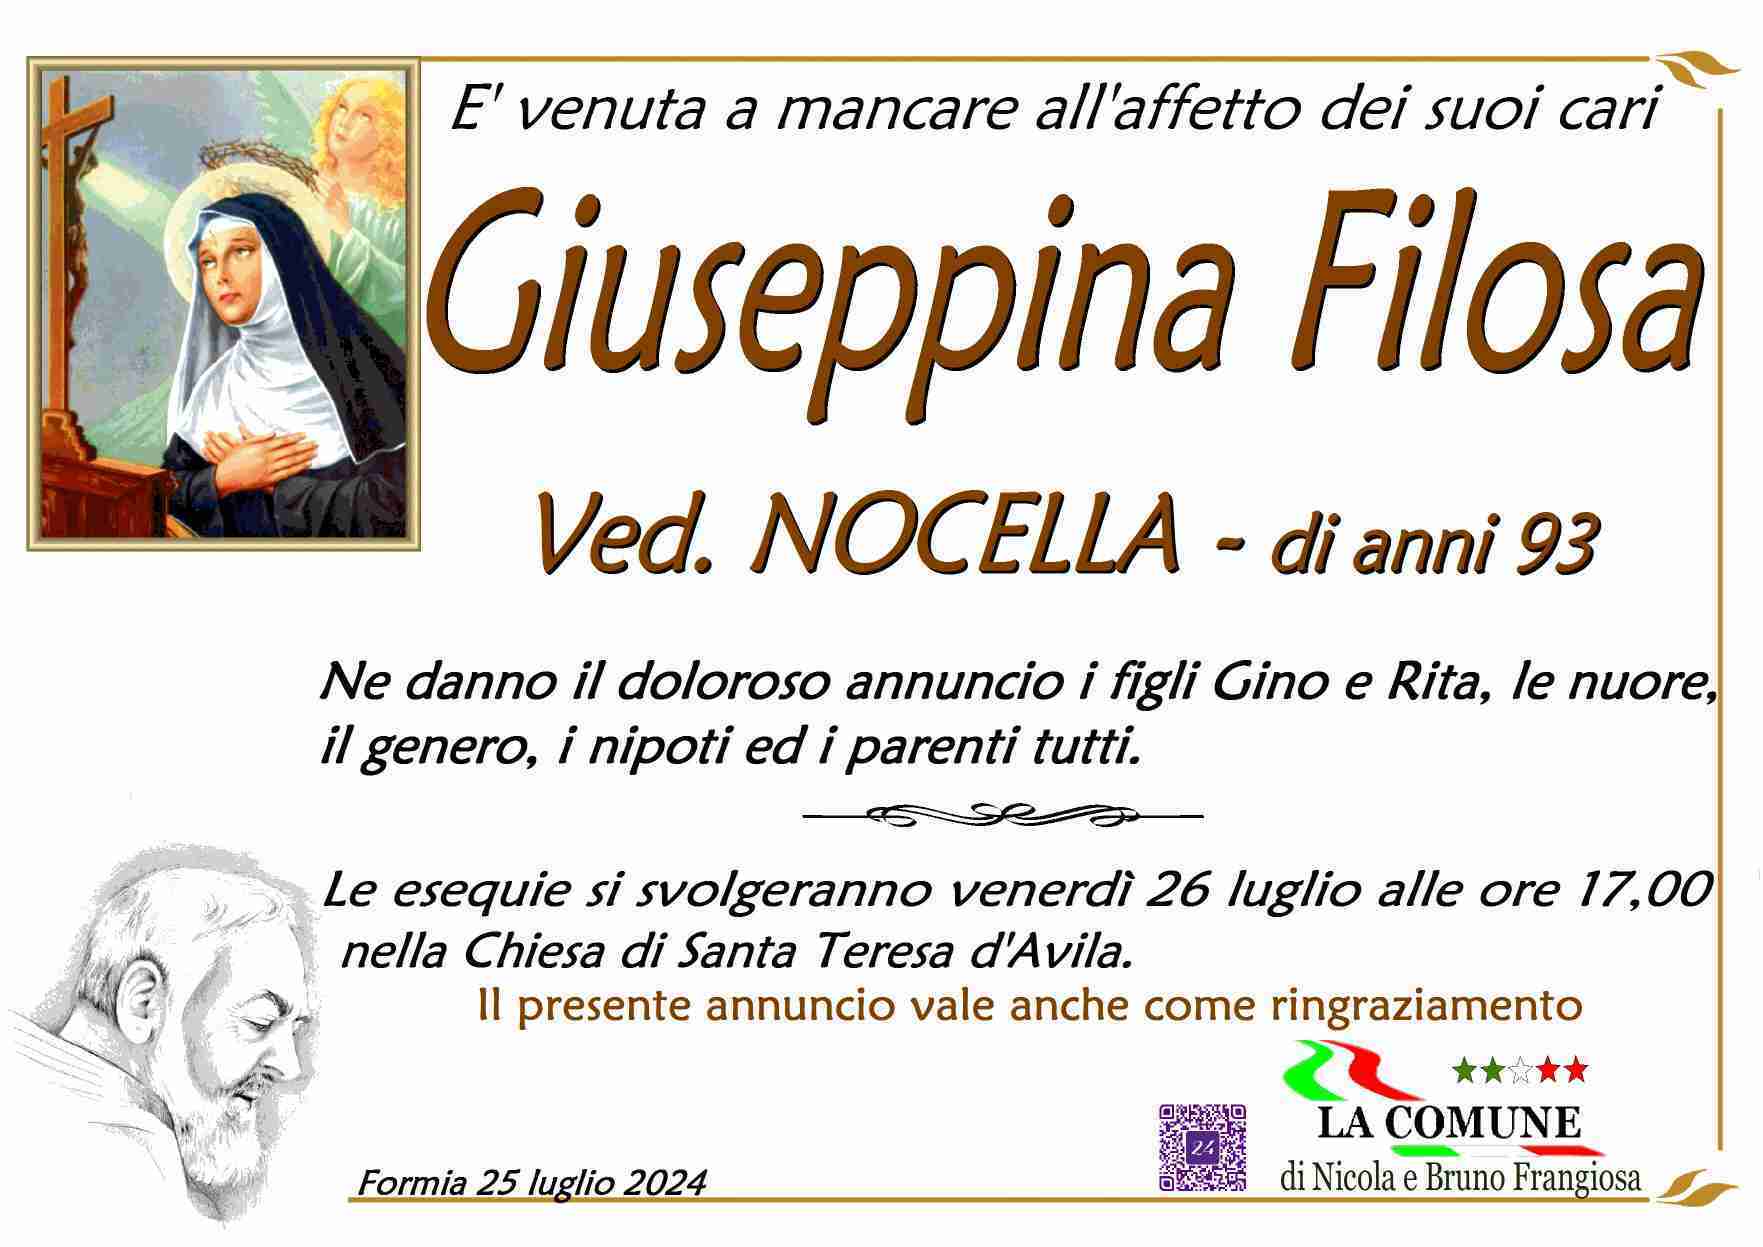 Giuseppina Filosa